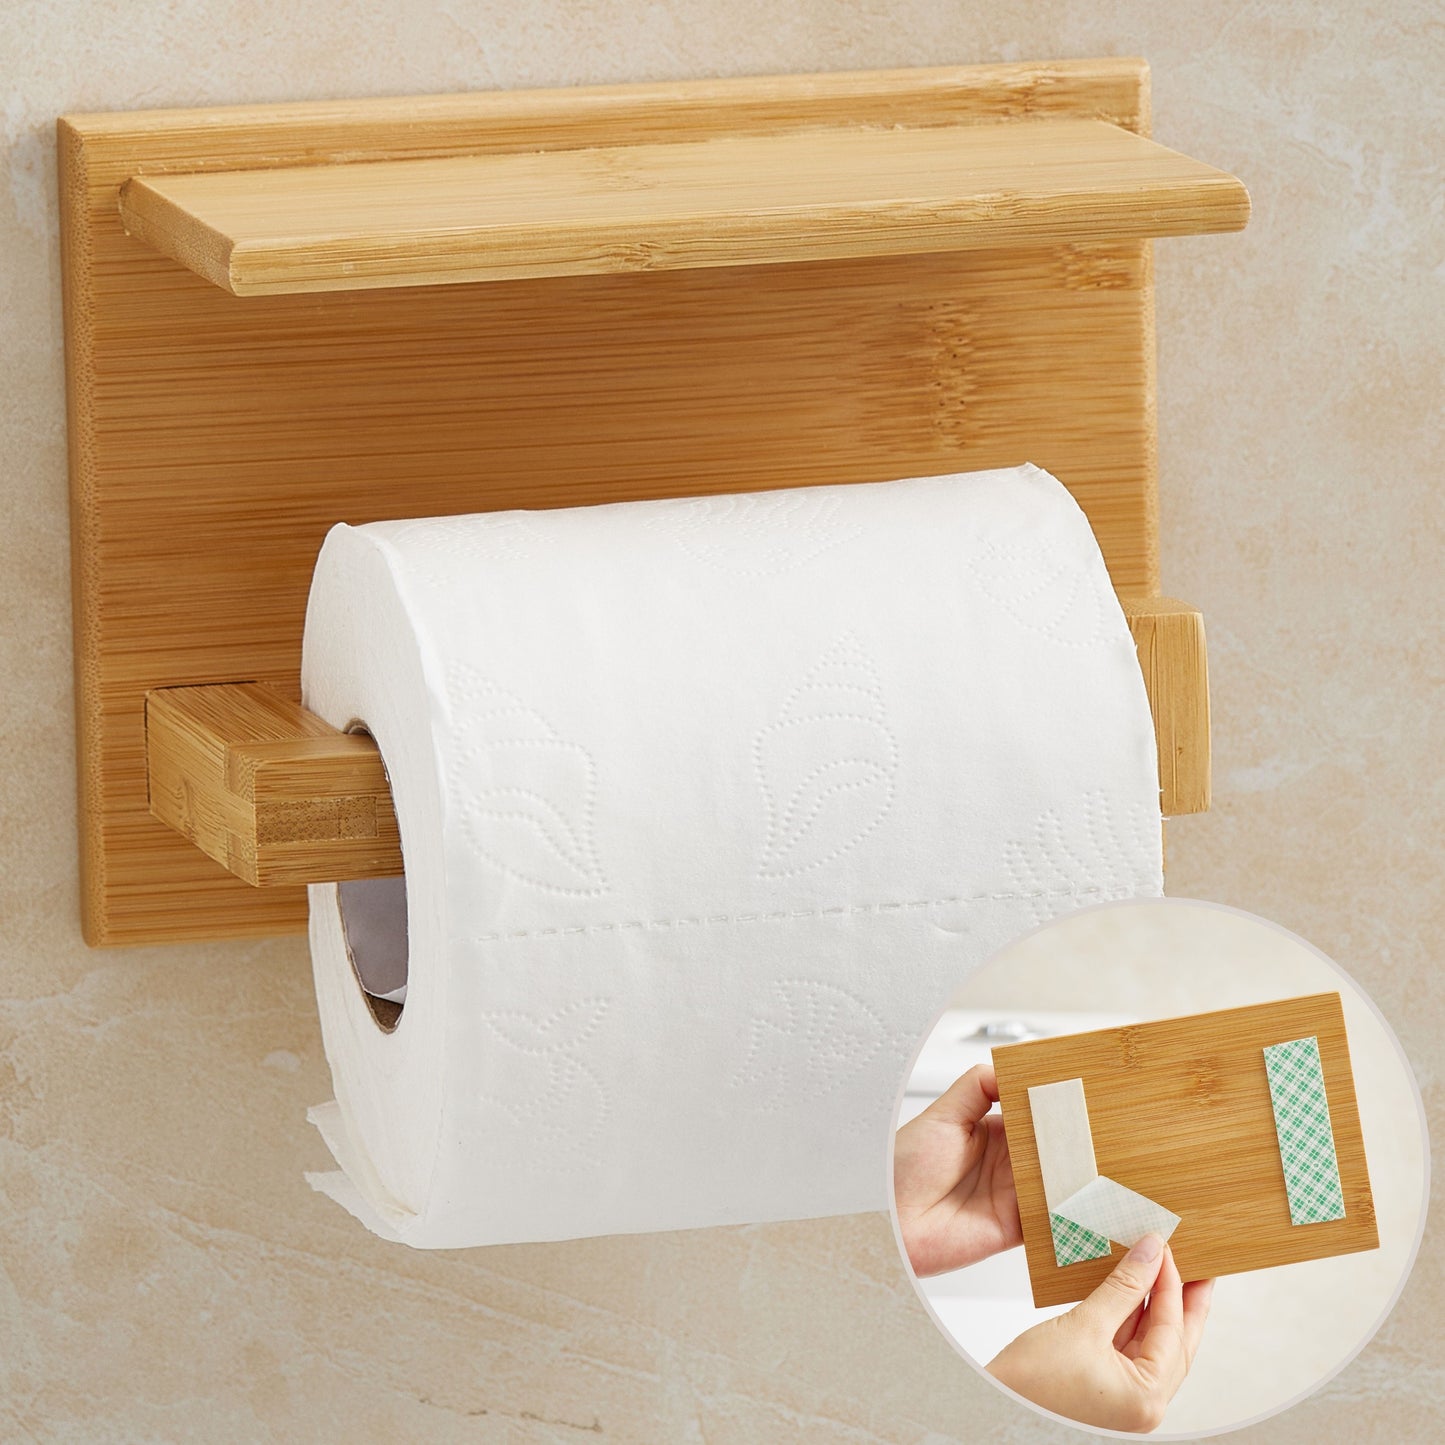 Mango wood toilet paper holder with shelf 